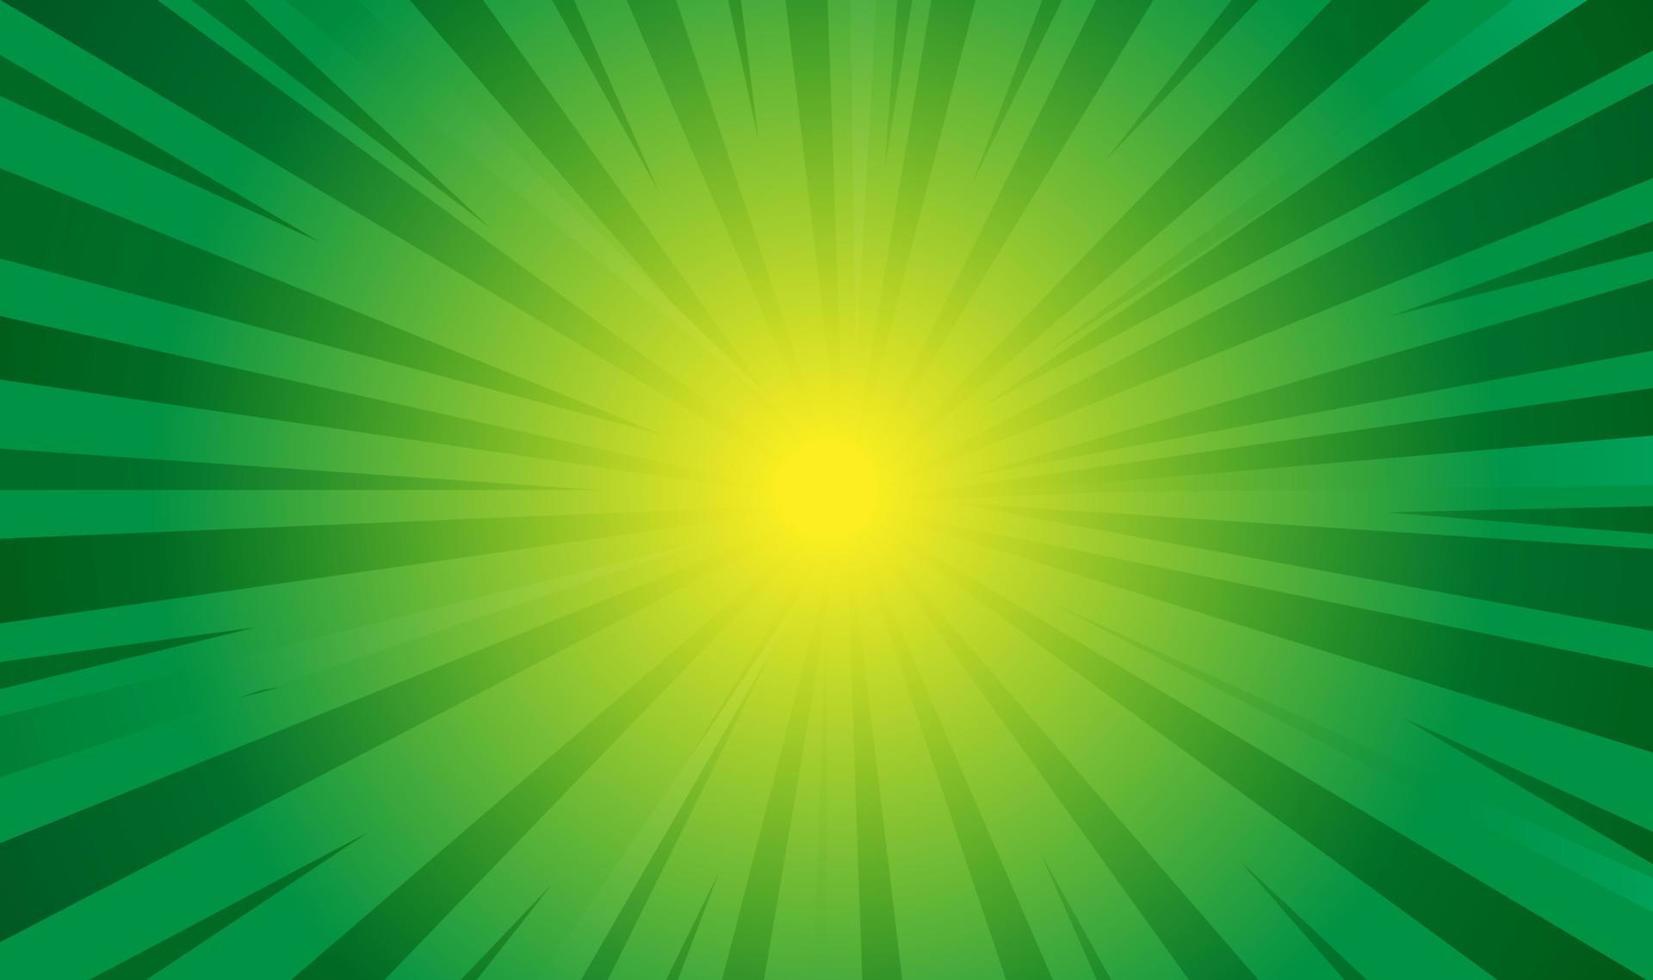 Green star burst background vector